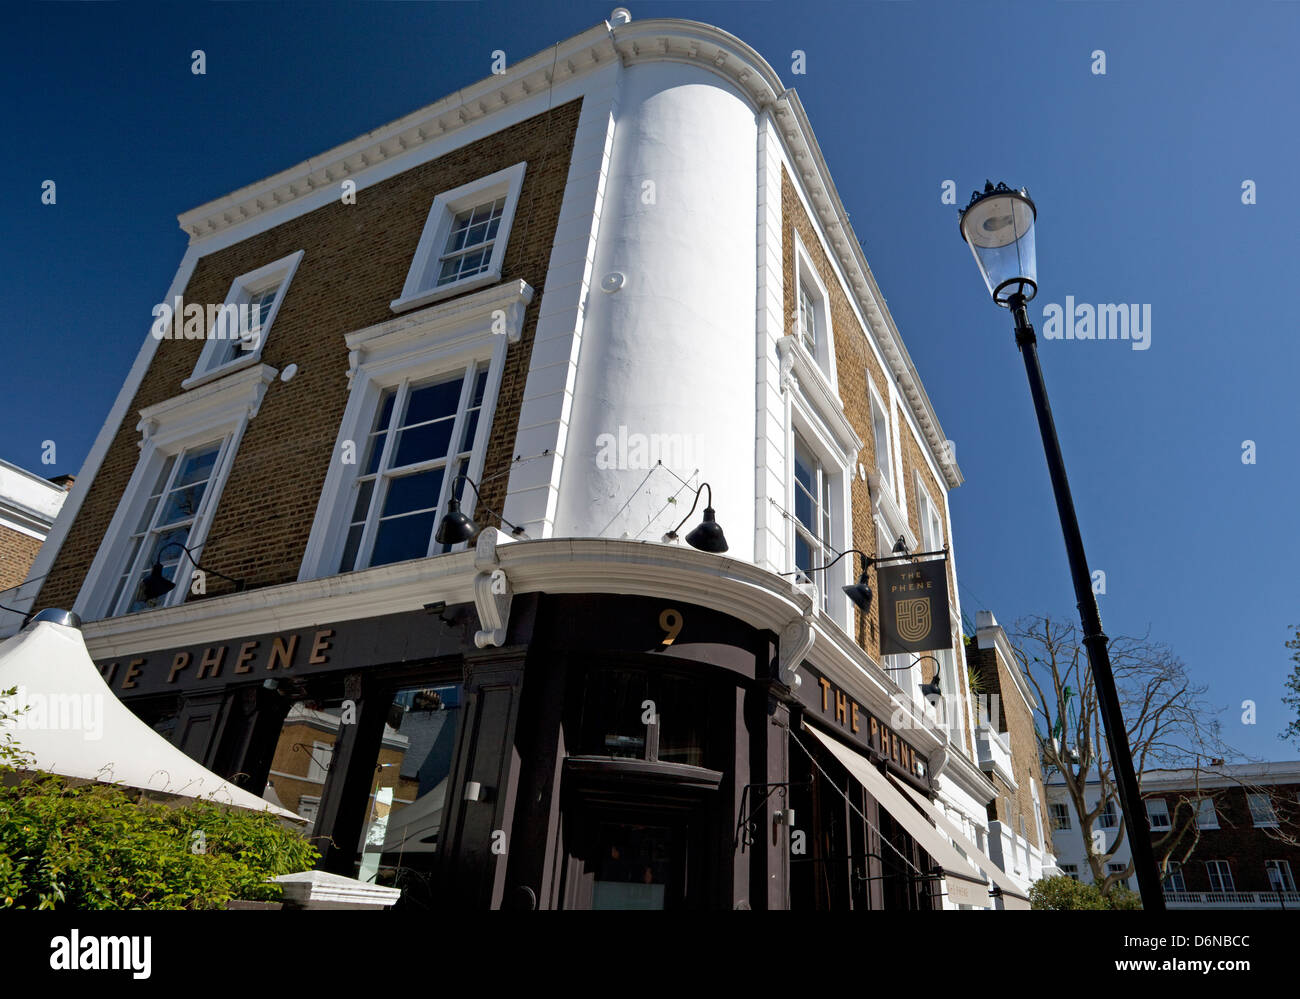 Fashionable Chelsea pub and restaurant The Phene, London Stock Photo